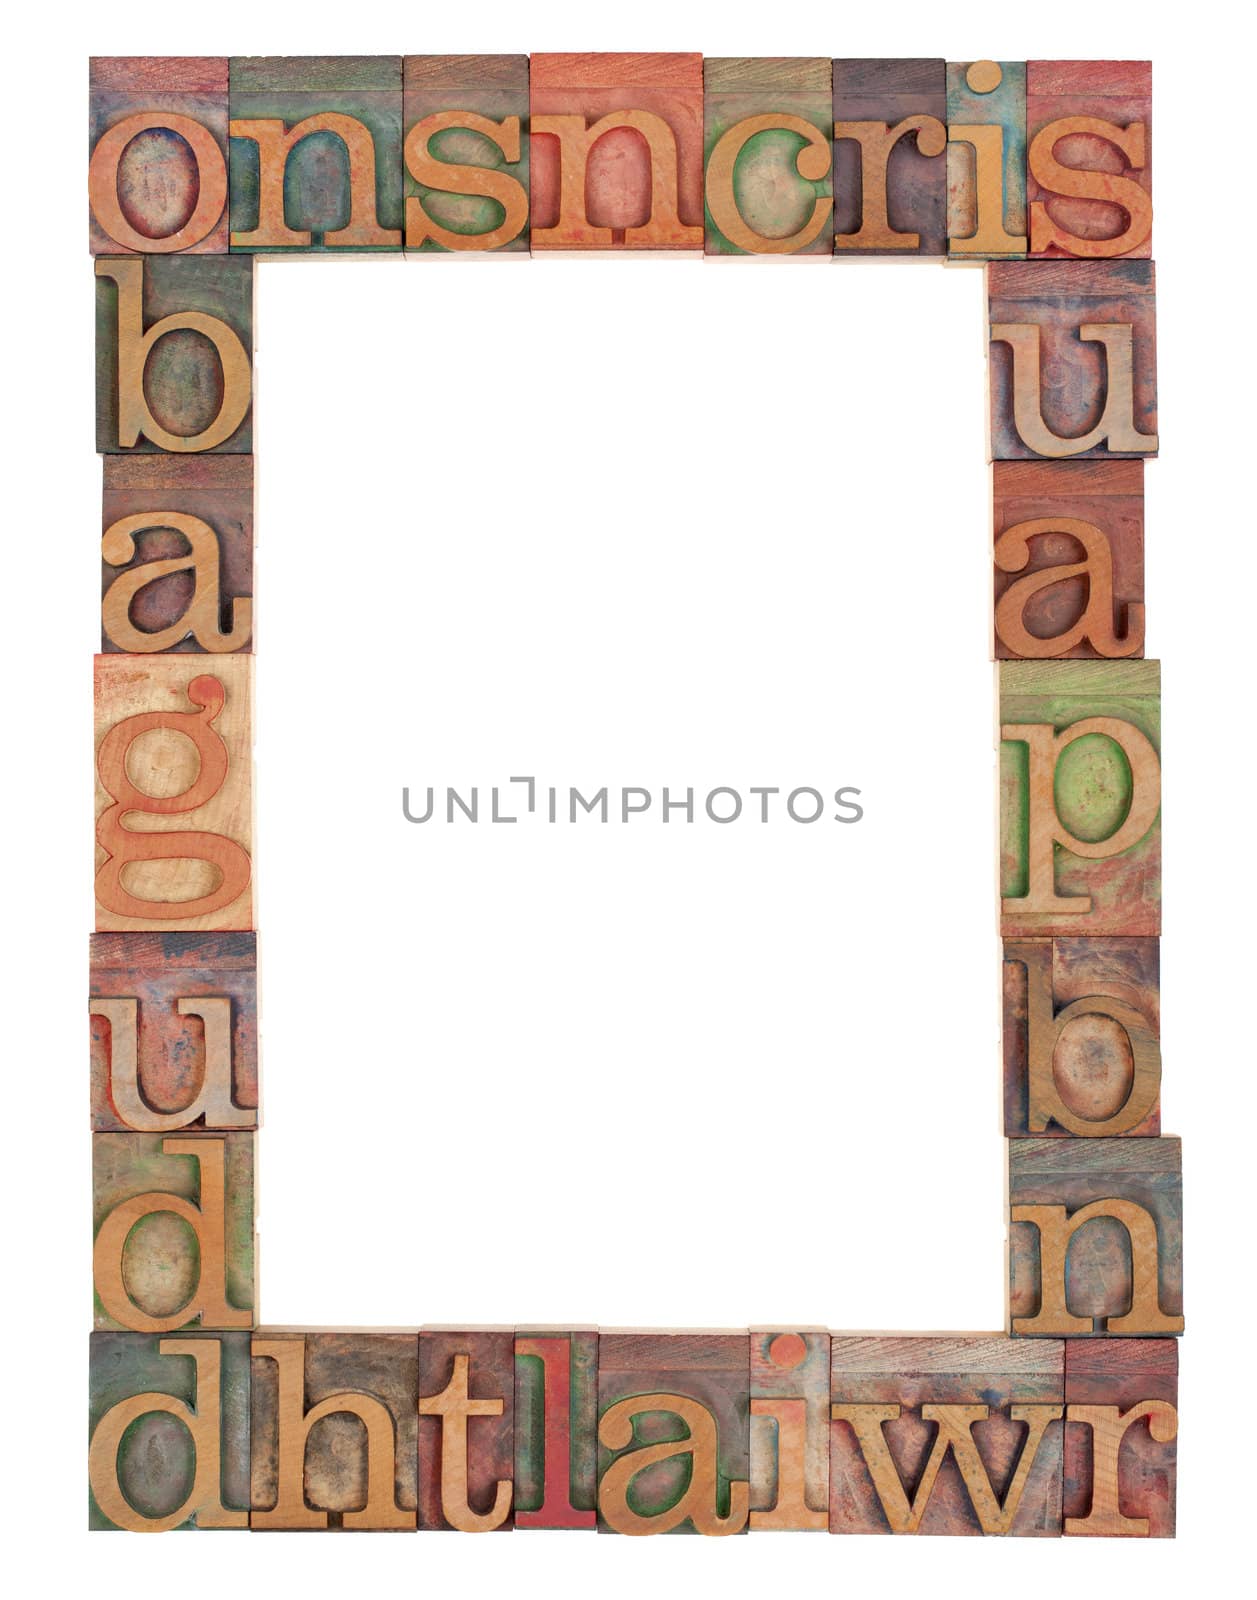 vertical alphabet frame - random vintage wood letterpress printing blocks surrounding white copy space